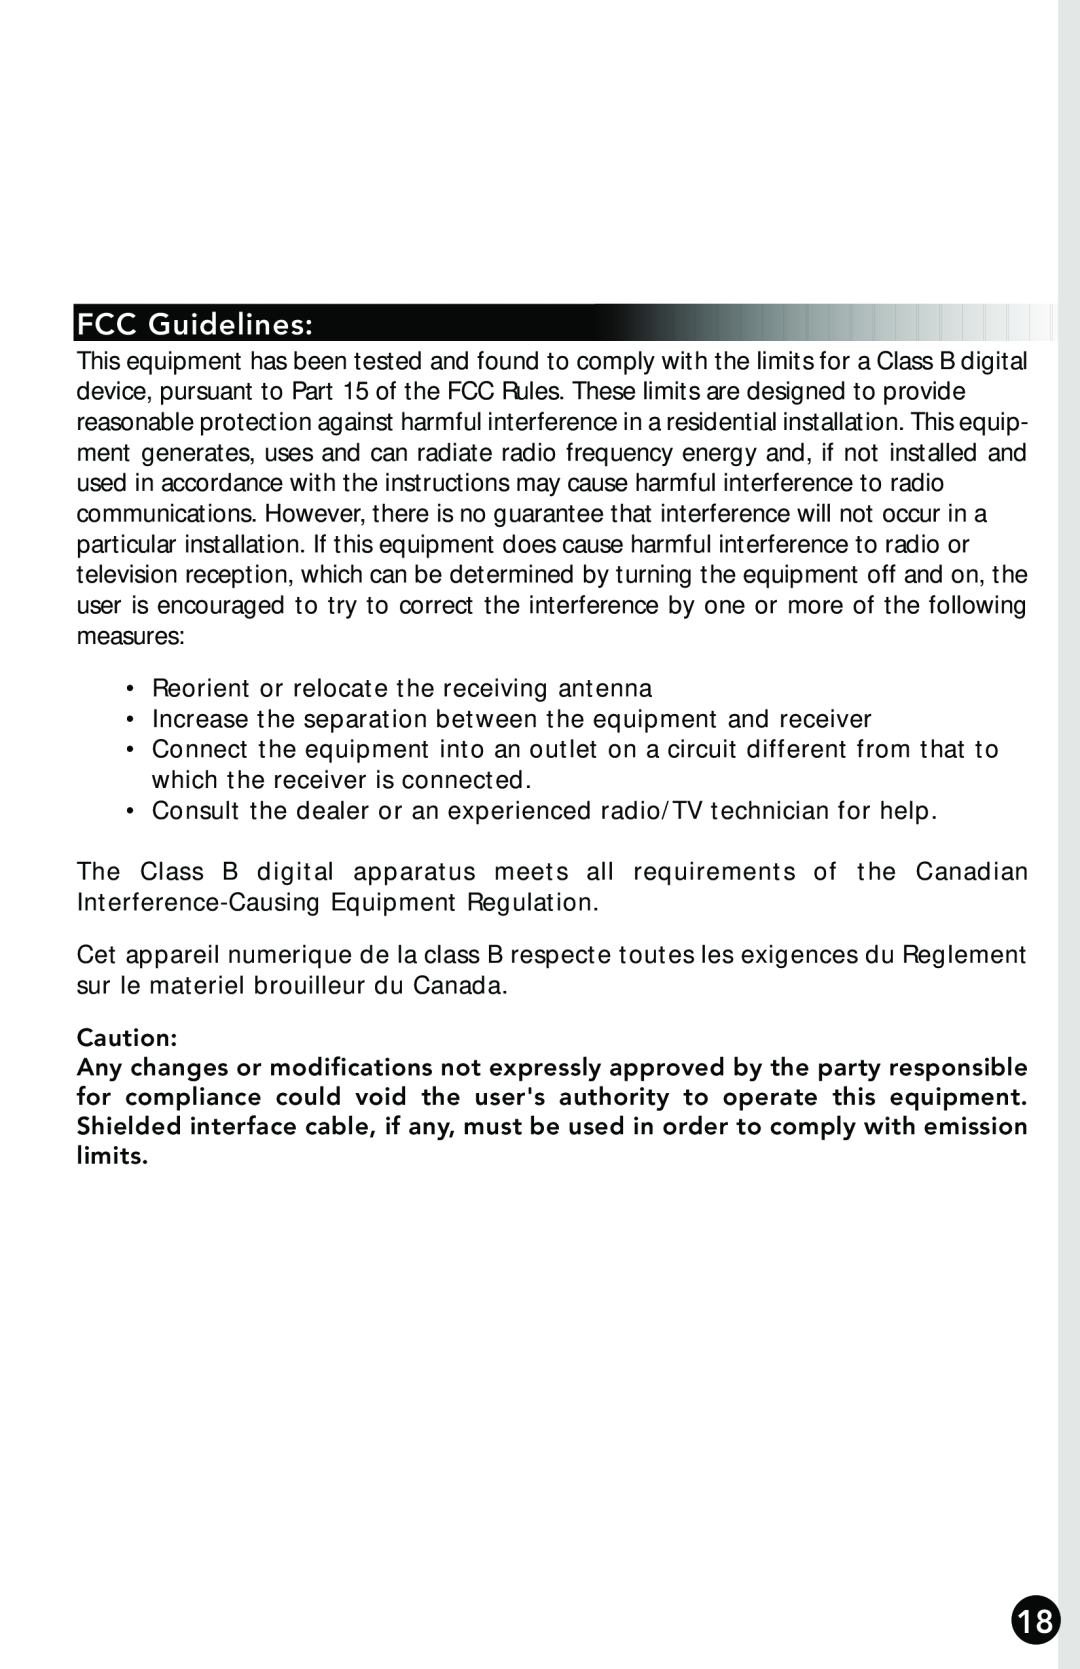 Memorex RF7000 manual FCC Guidelines 